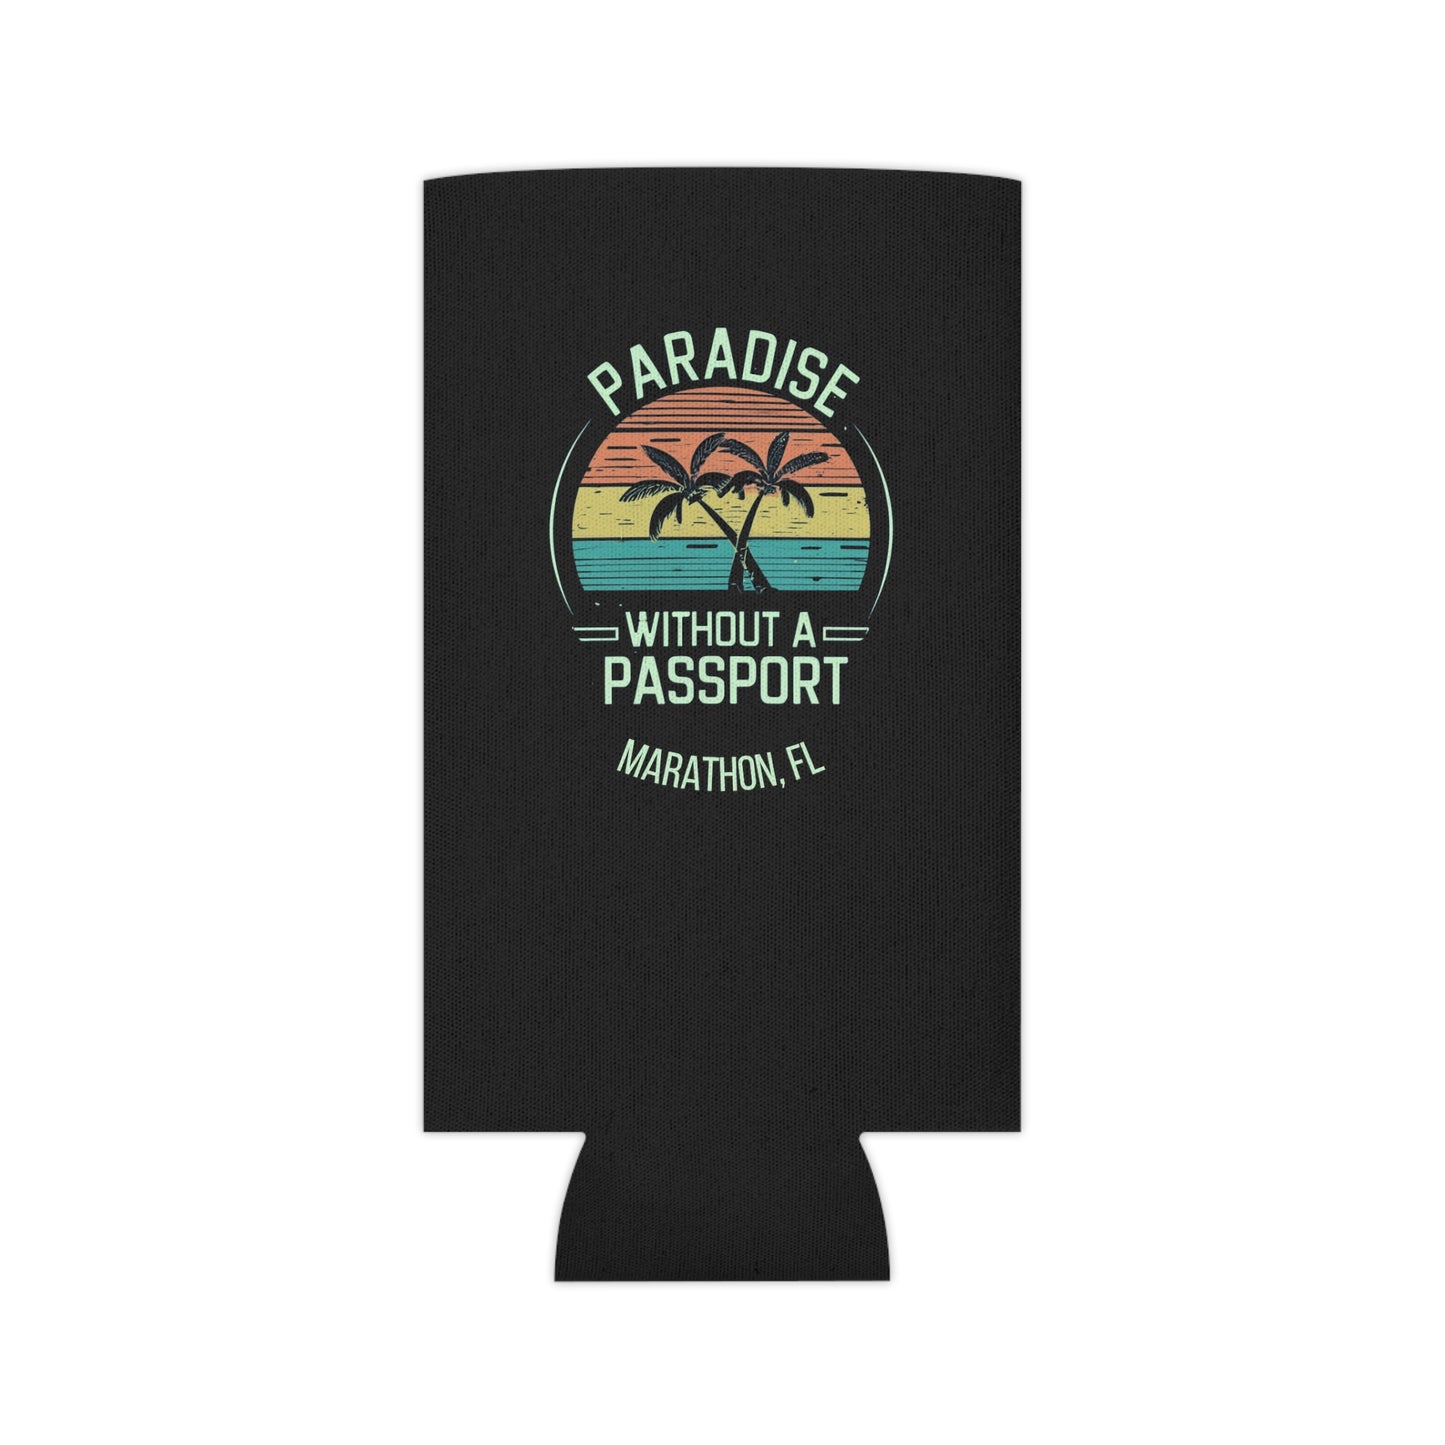 PARADISE WITHOUT A PASSPORT - MARATHON FL - florida keys - beach coozie